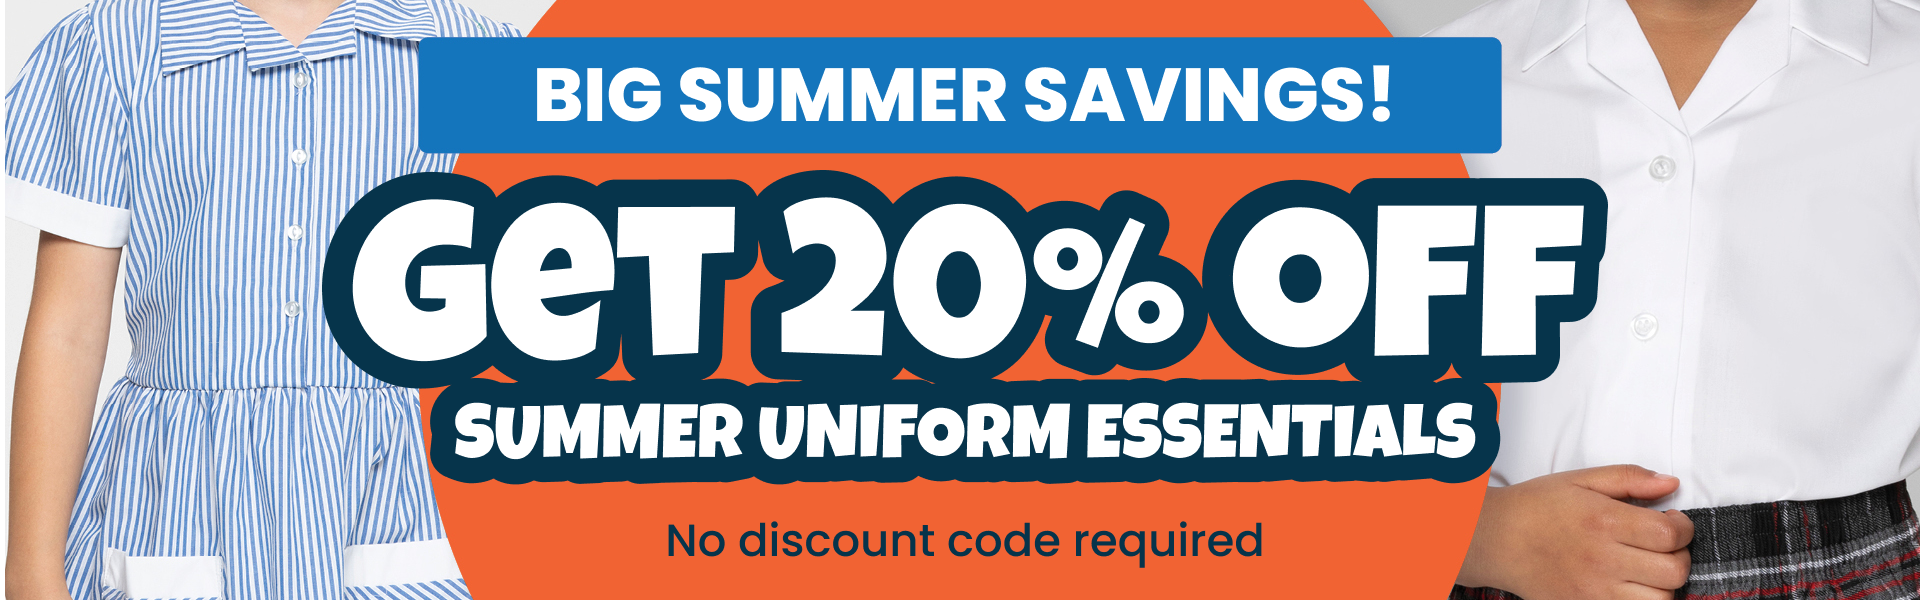 Big summer savings! Get 20% off summer uniform essentials